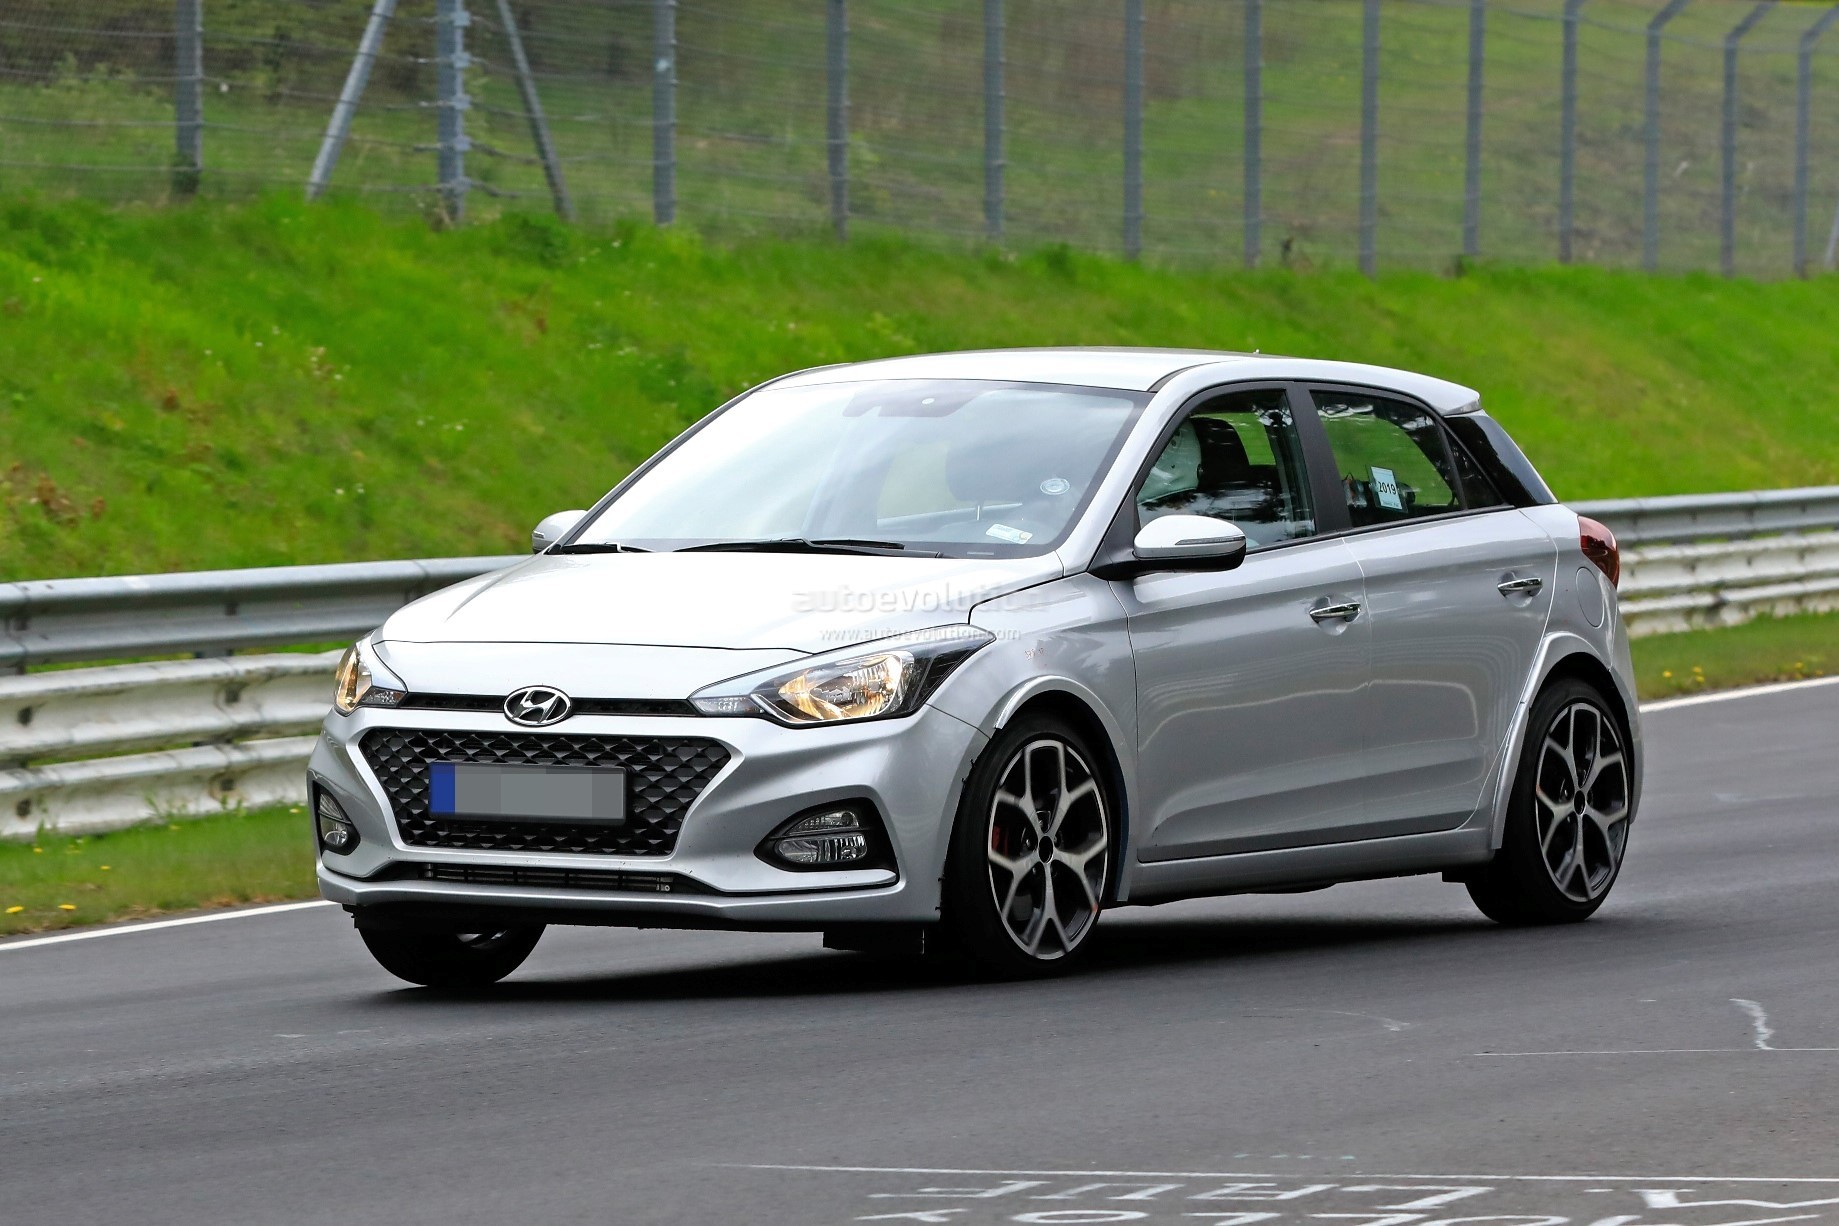 2020 Hyundai i20 N Spied Testing At the Nurburgring - autoevolution